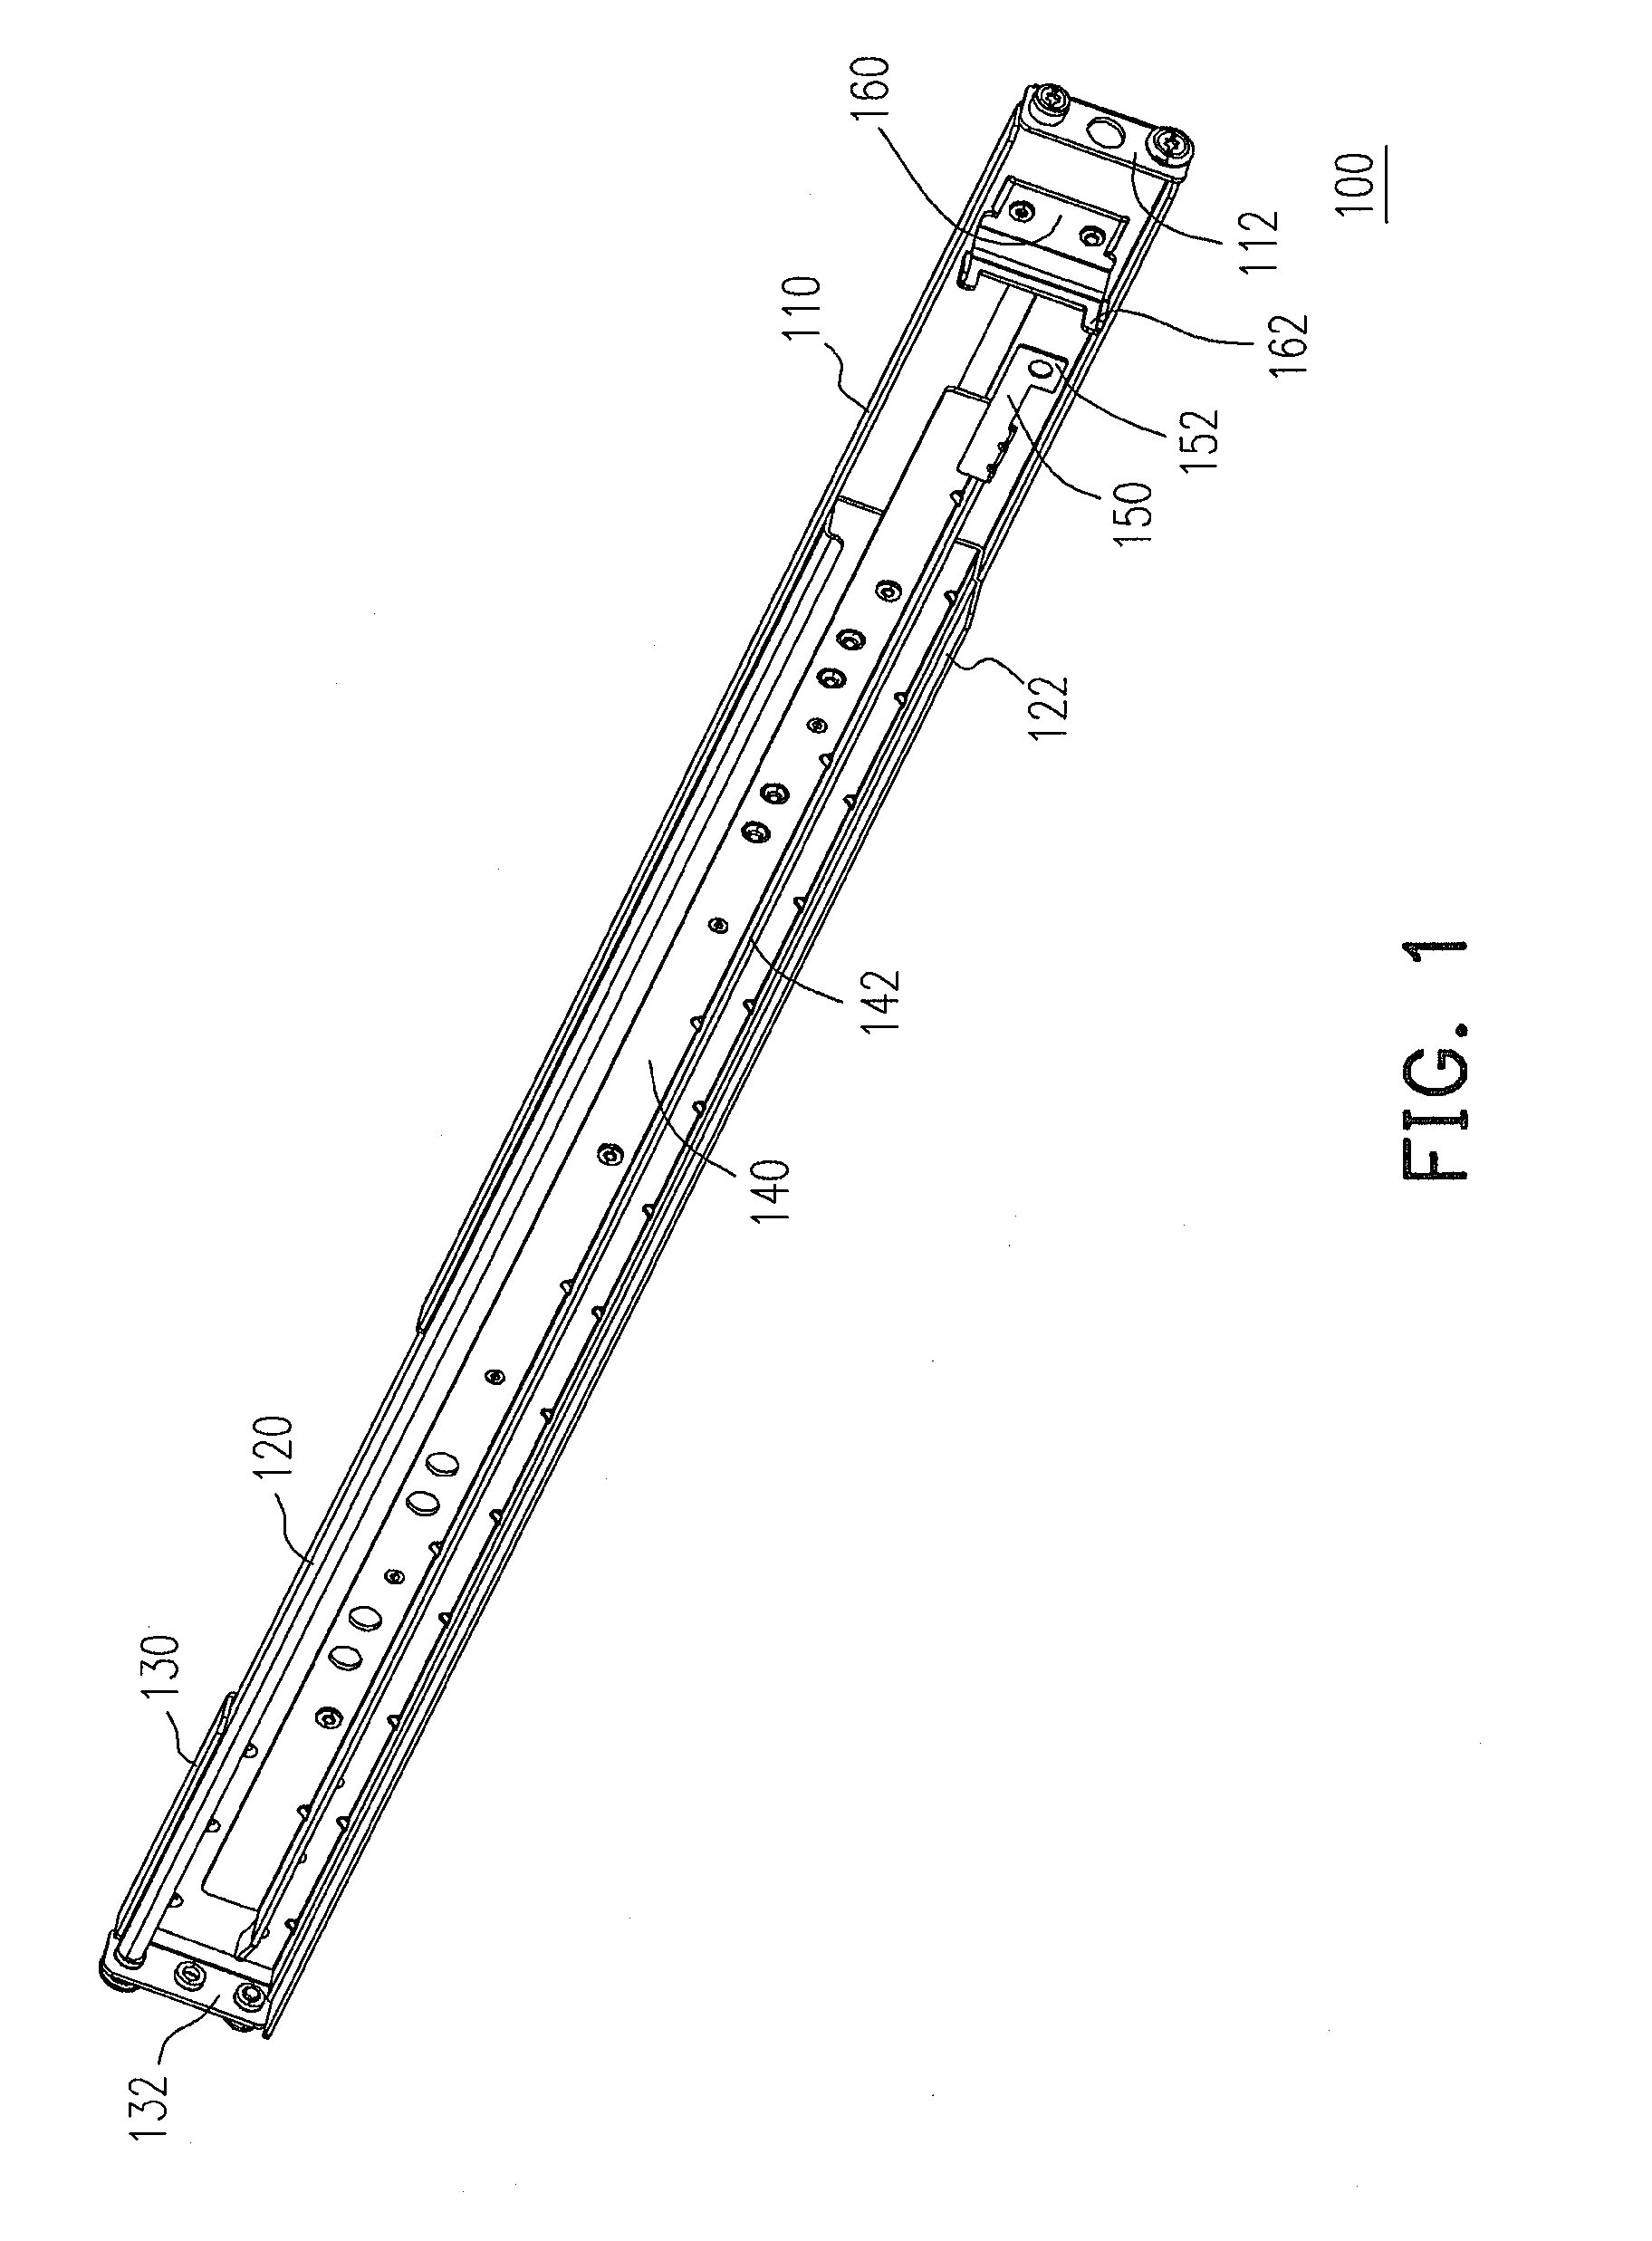 Slide rail structure